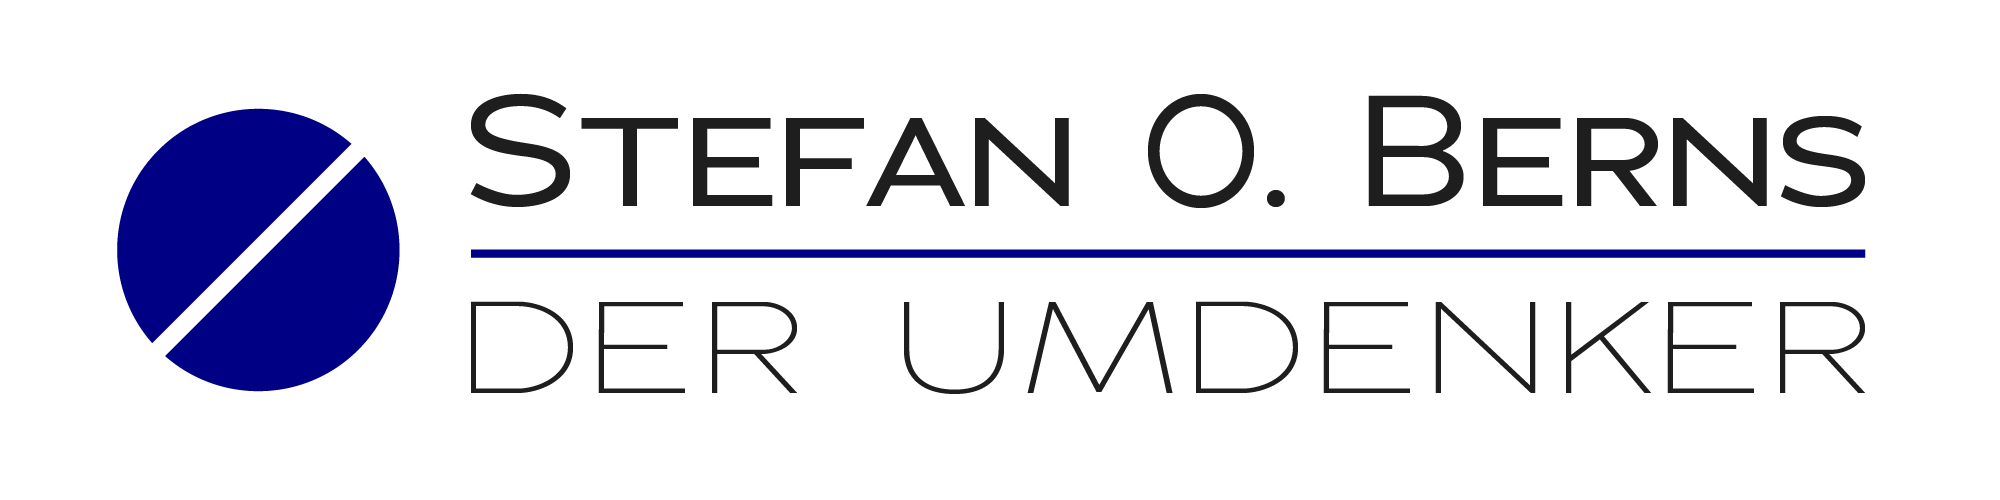 Stefan O. Berns - DER UMDENKER Logo